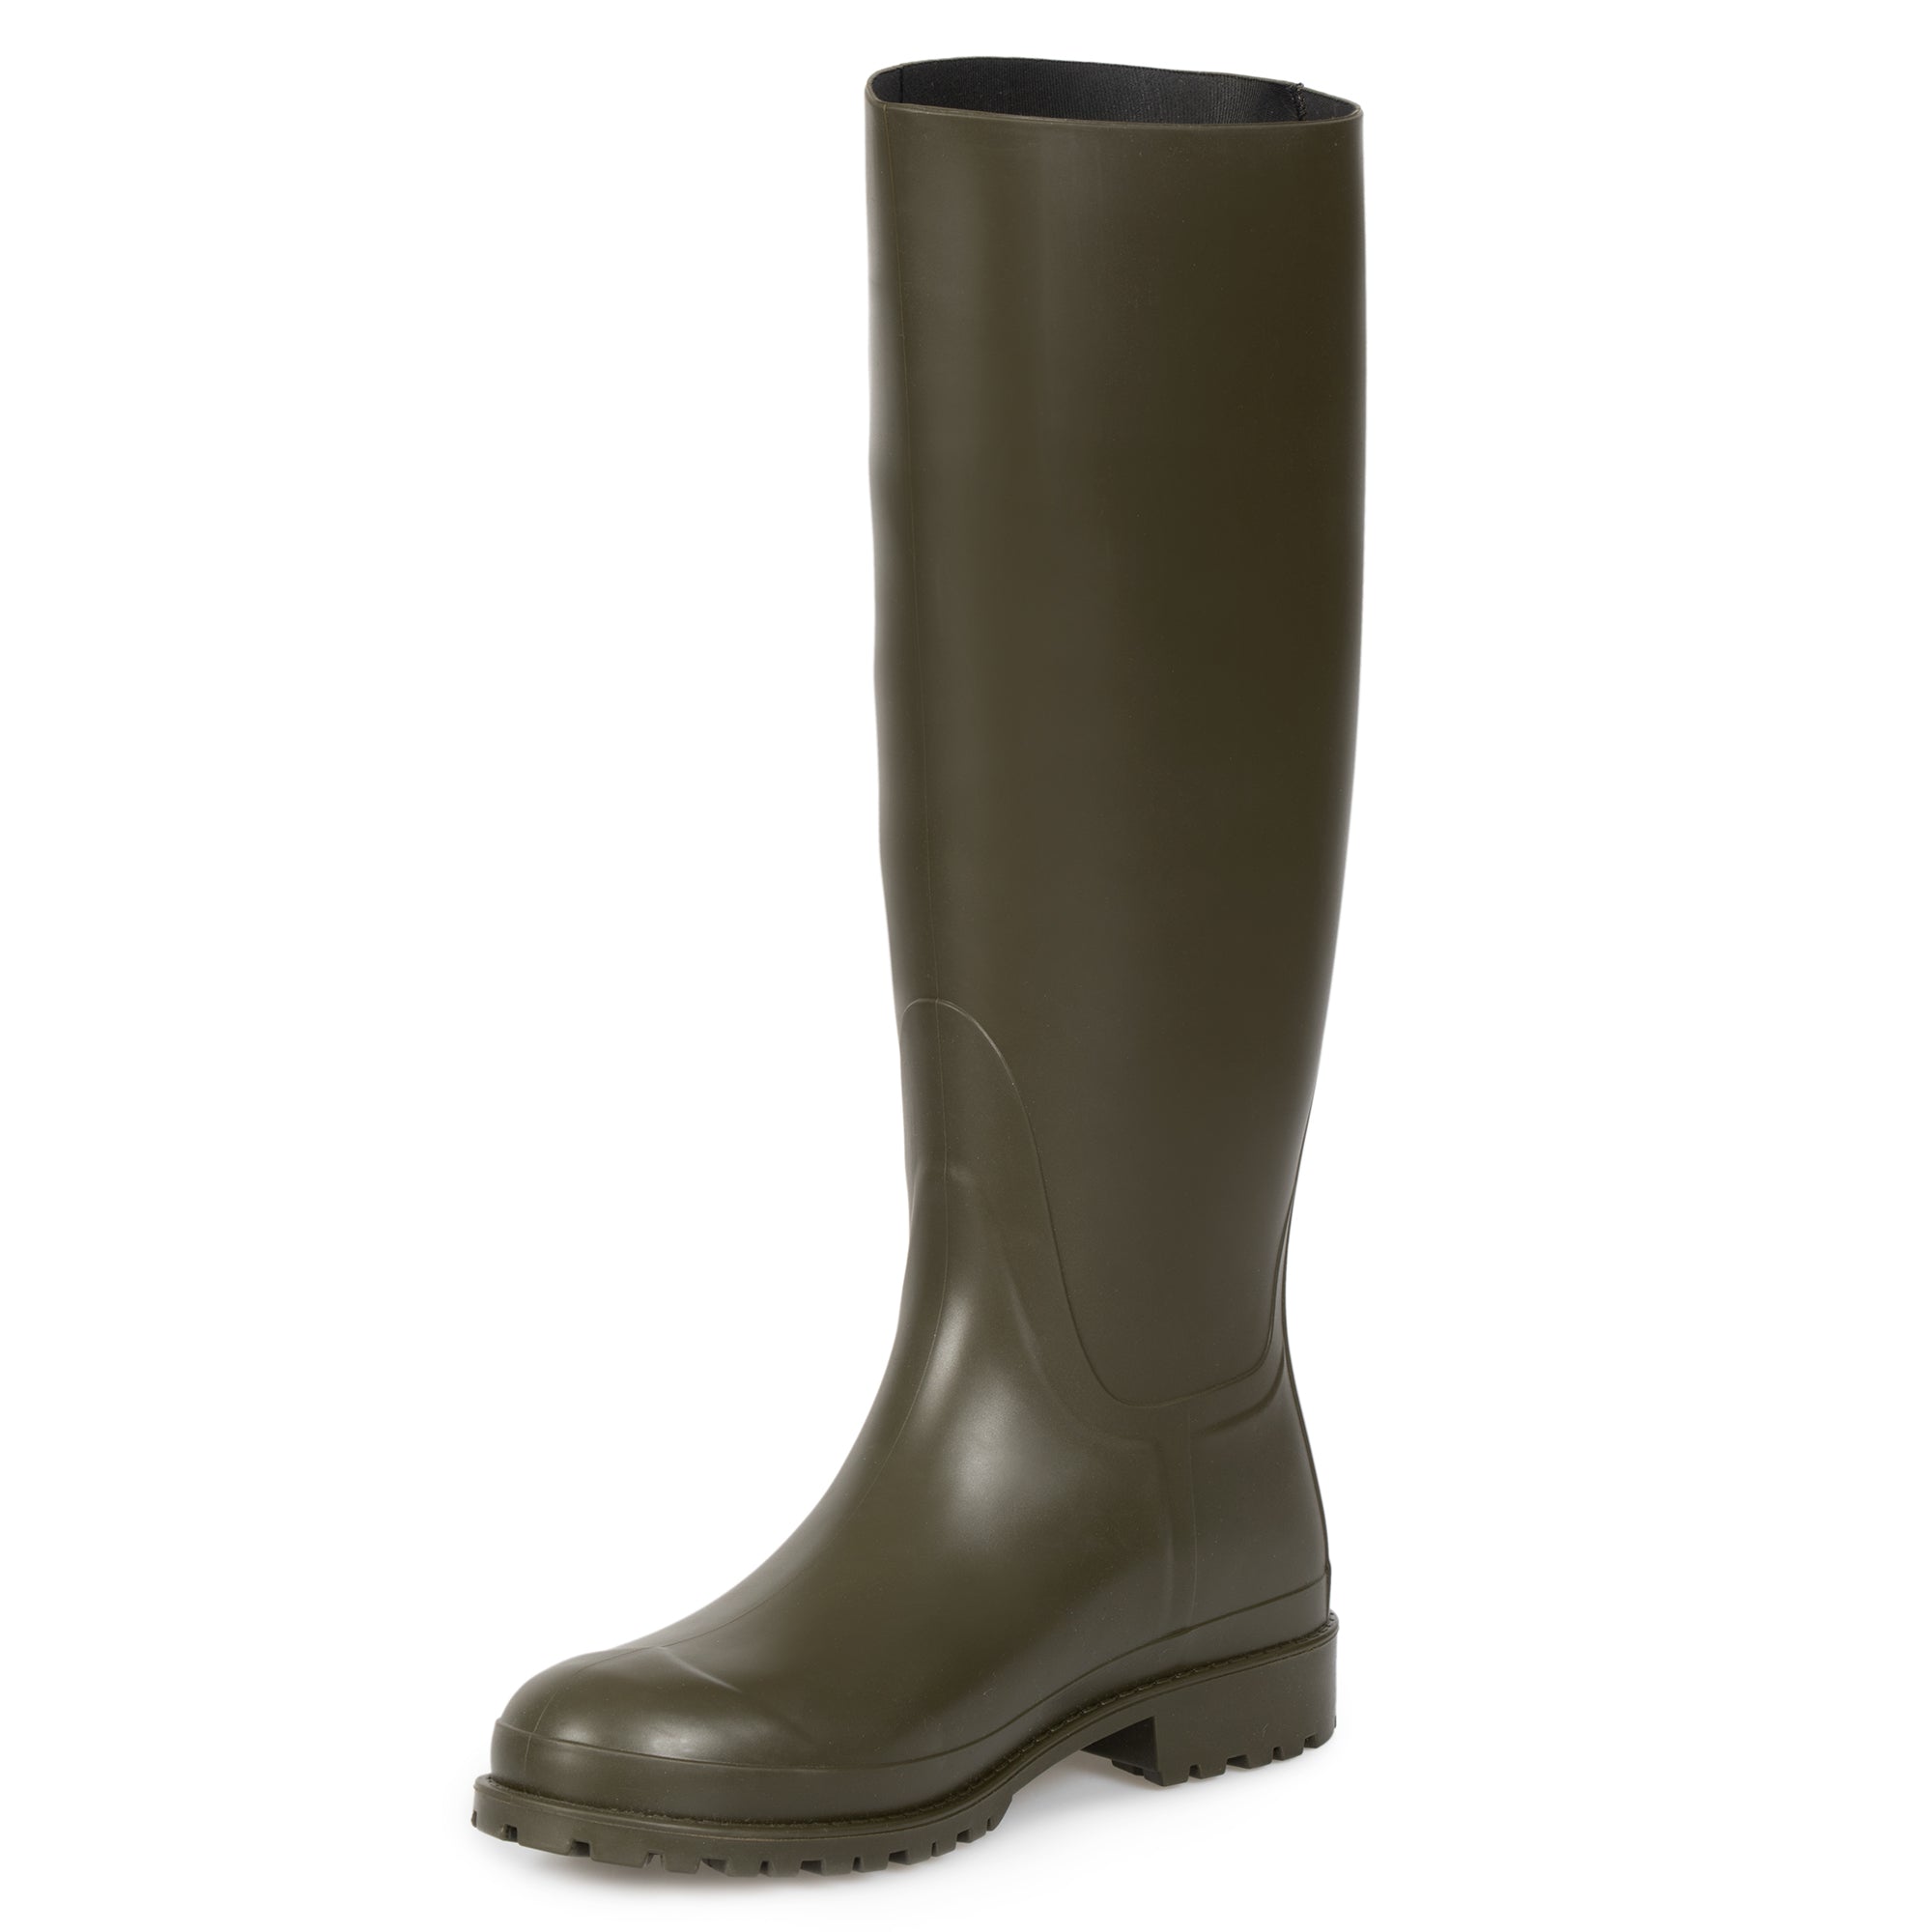 Saint Laurent Olive Green Rain Boots - Size 40